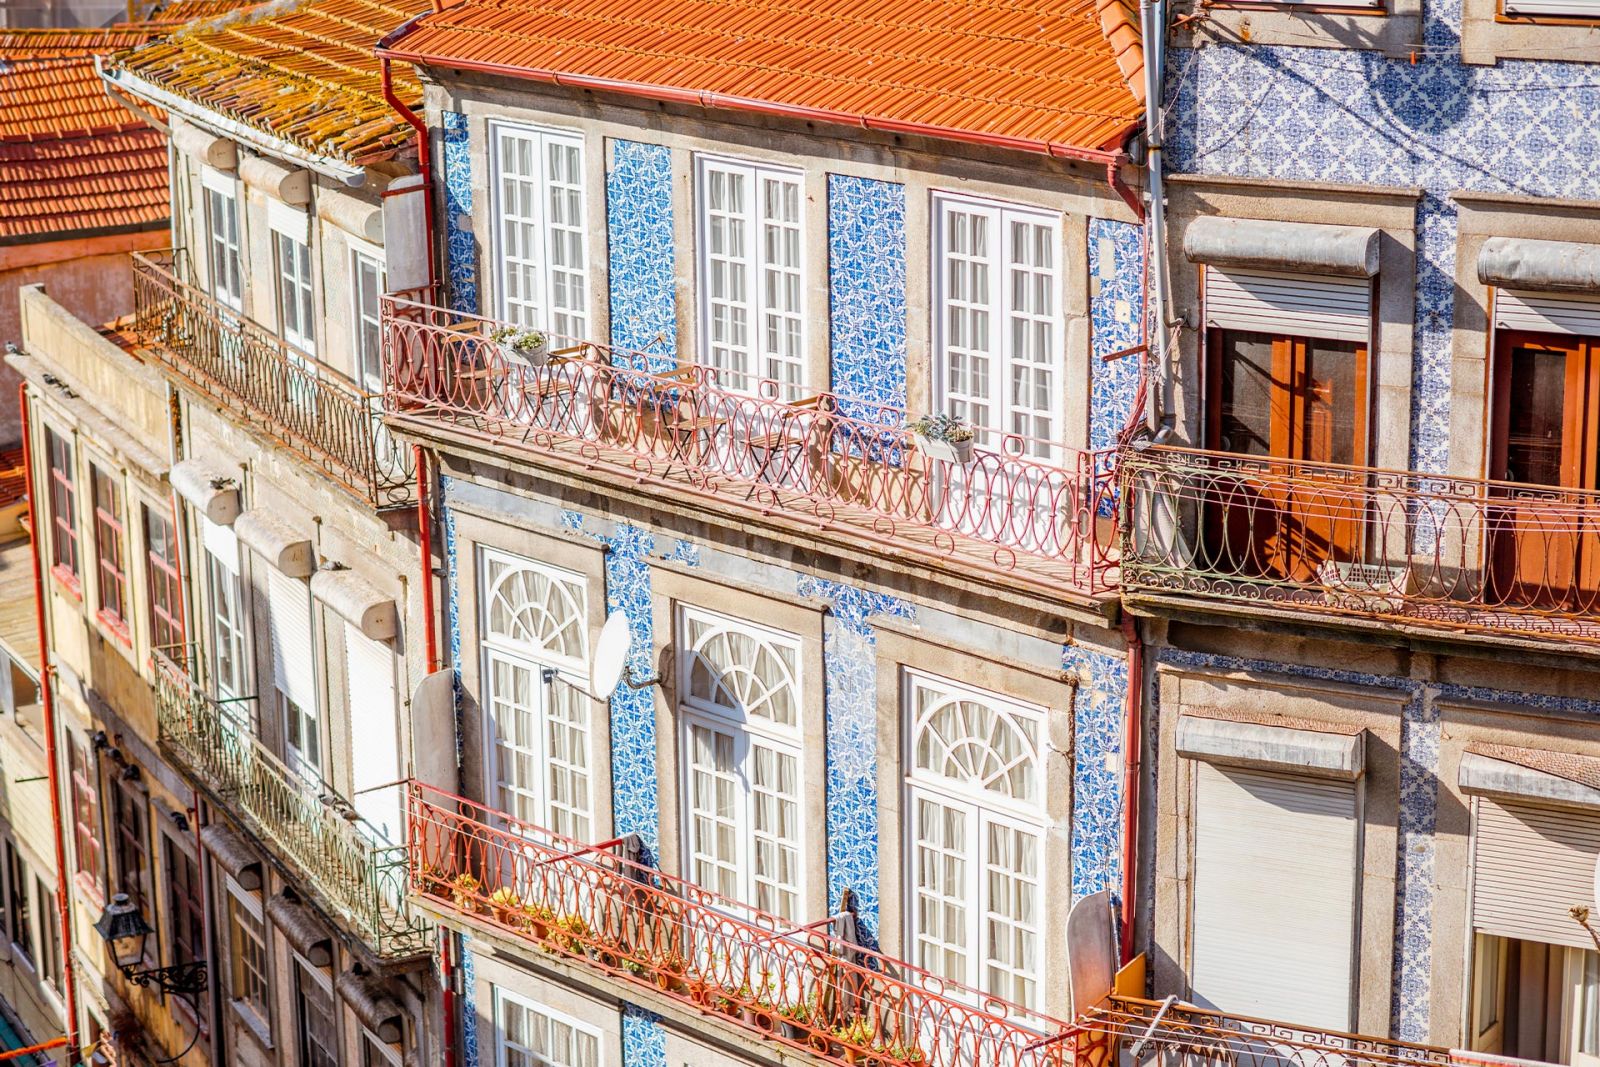 Porto, Tiles on Wall, Portugal